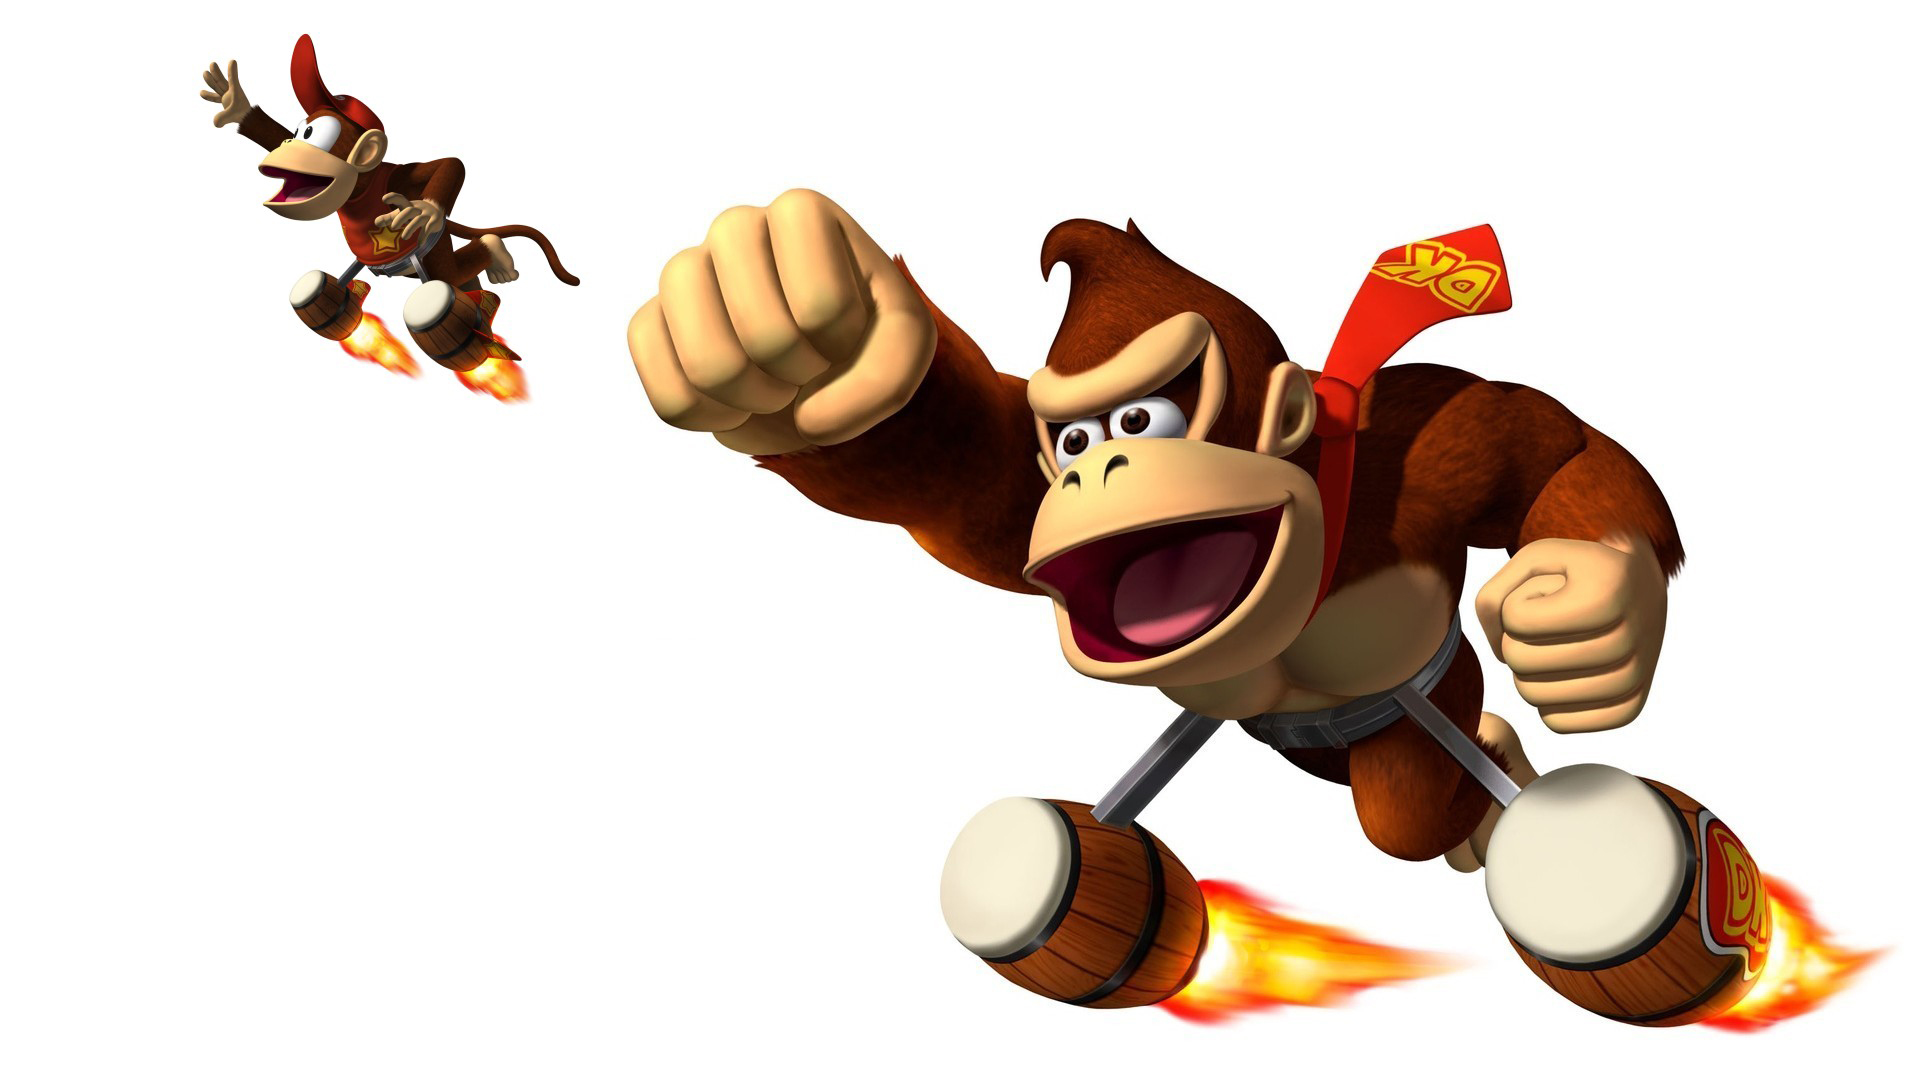 Donkey Kong: Barrel Blast